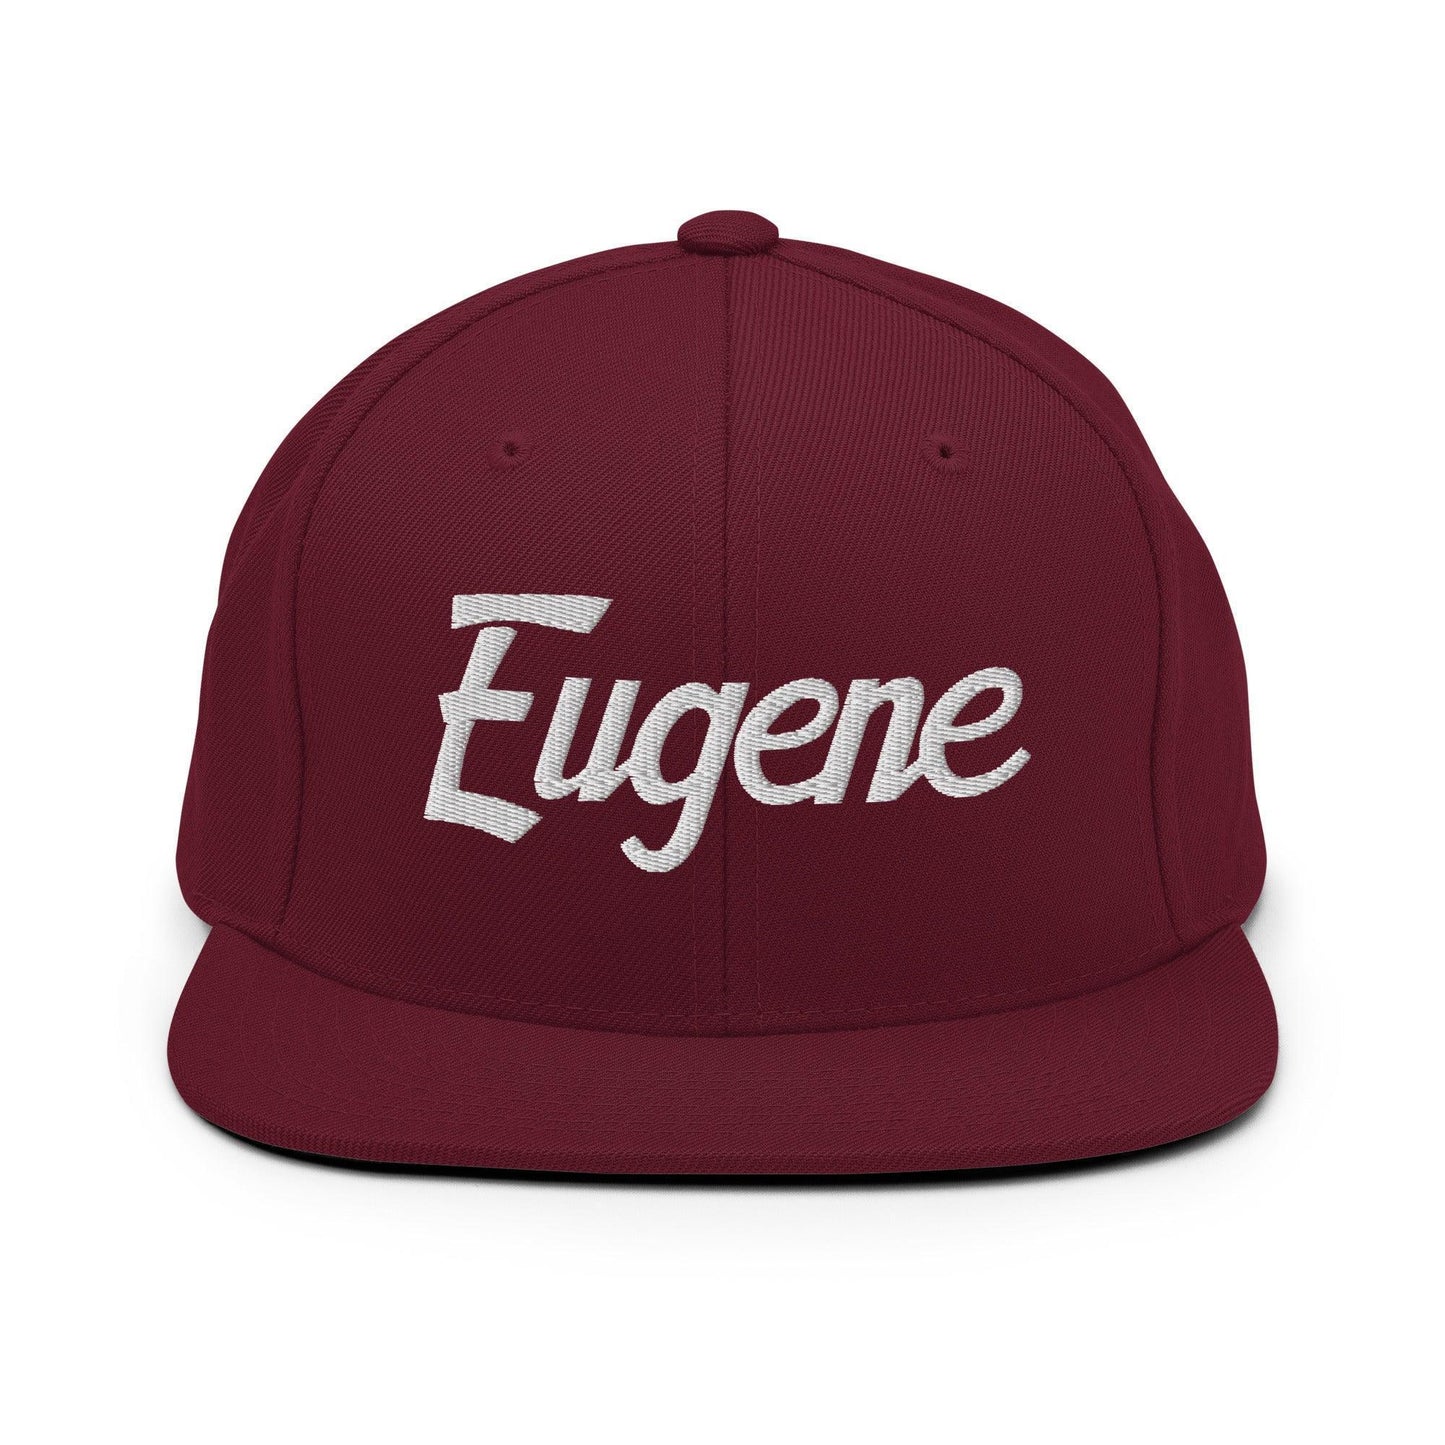 Eugene Script Snapback Hat Maroon